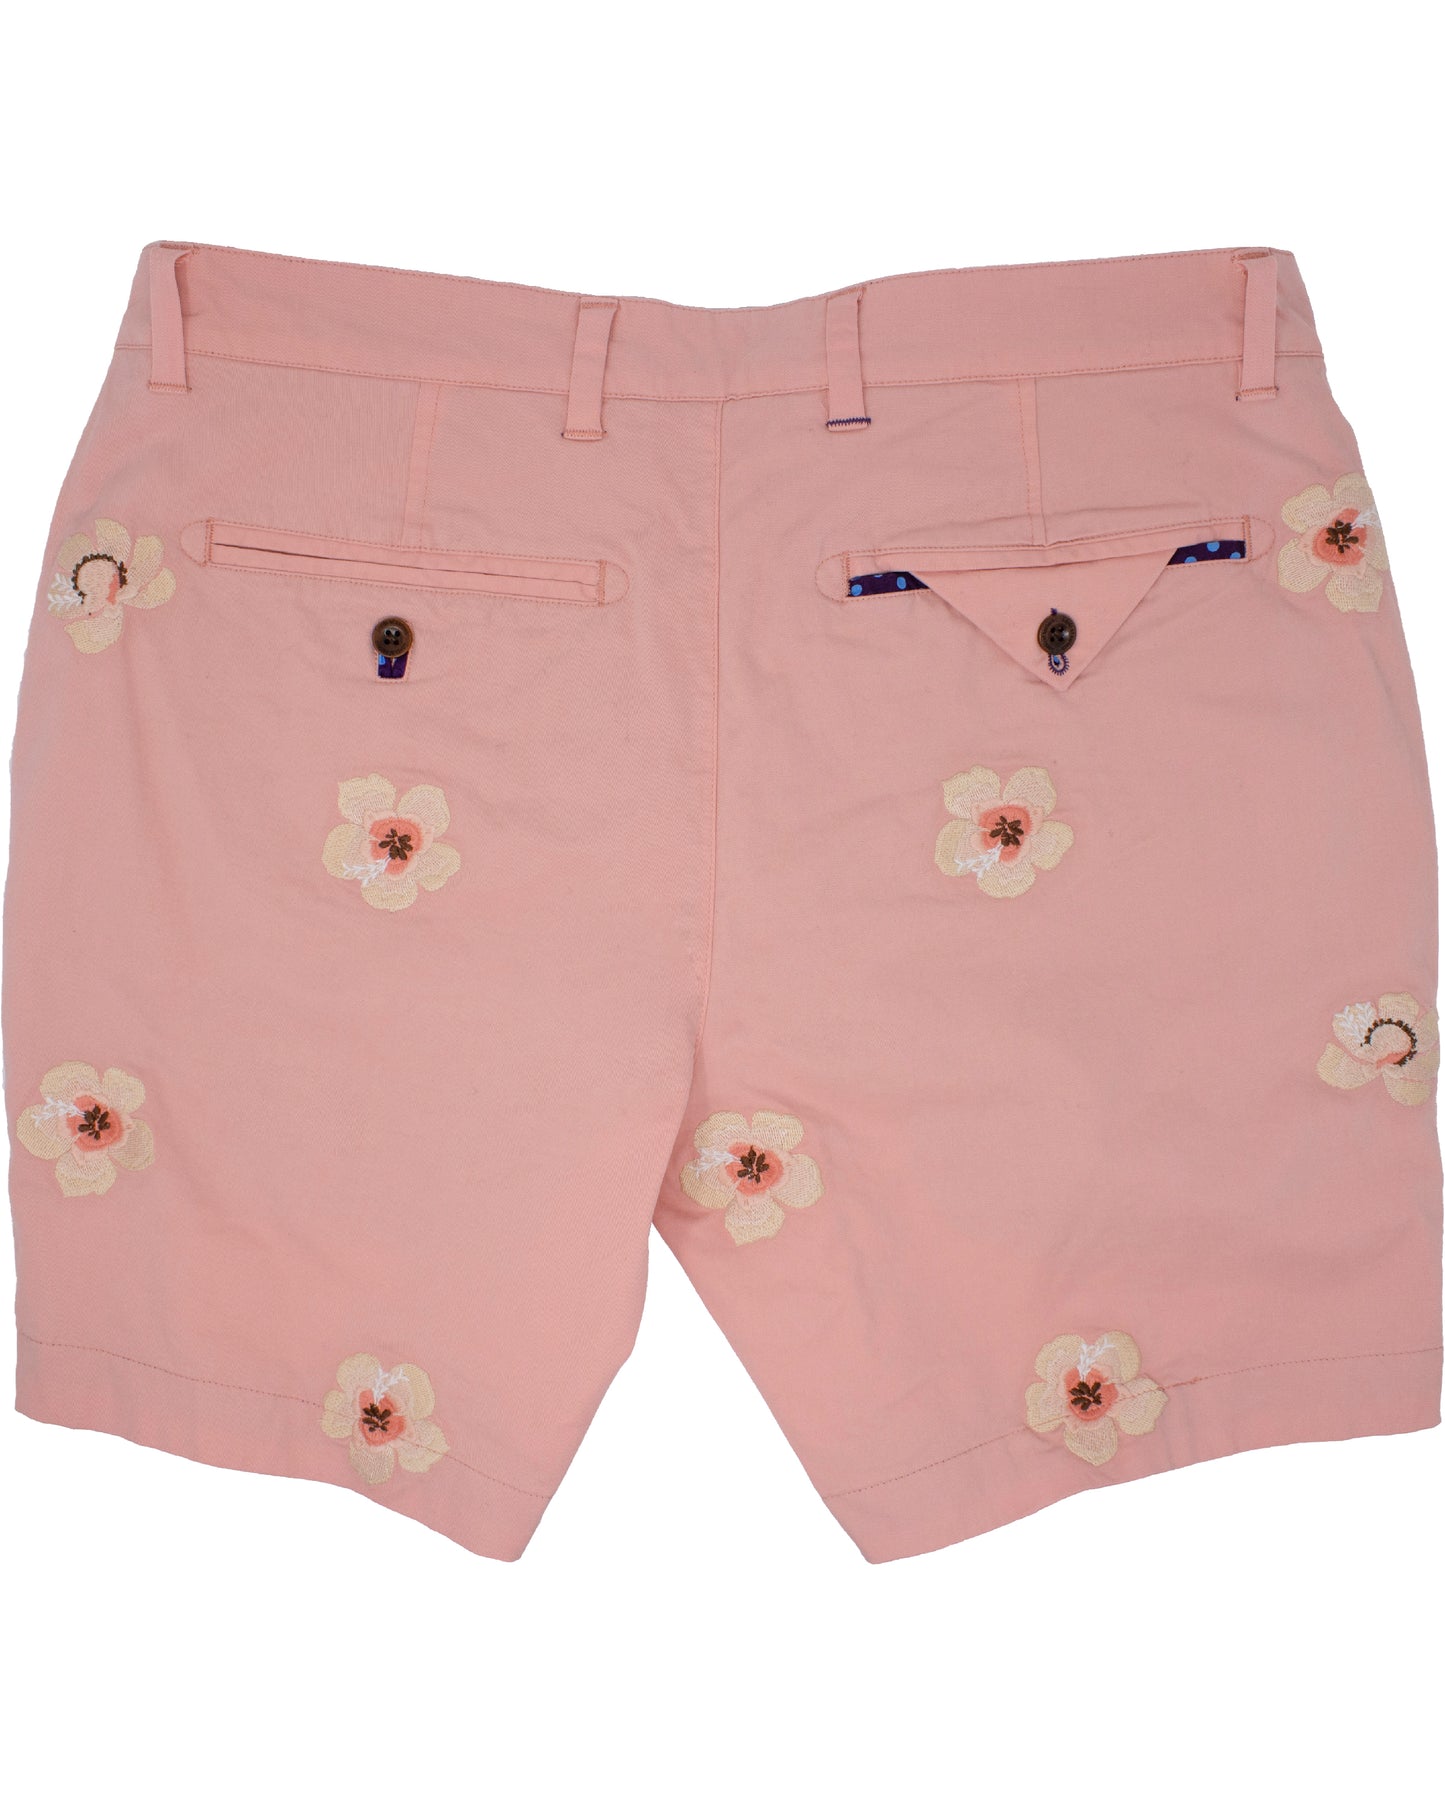 Edward Peach Flower Embroidery Shorts